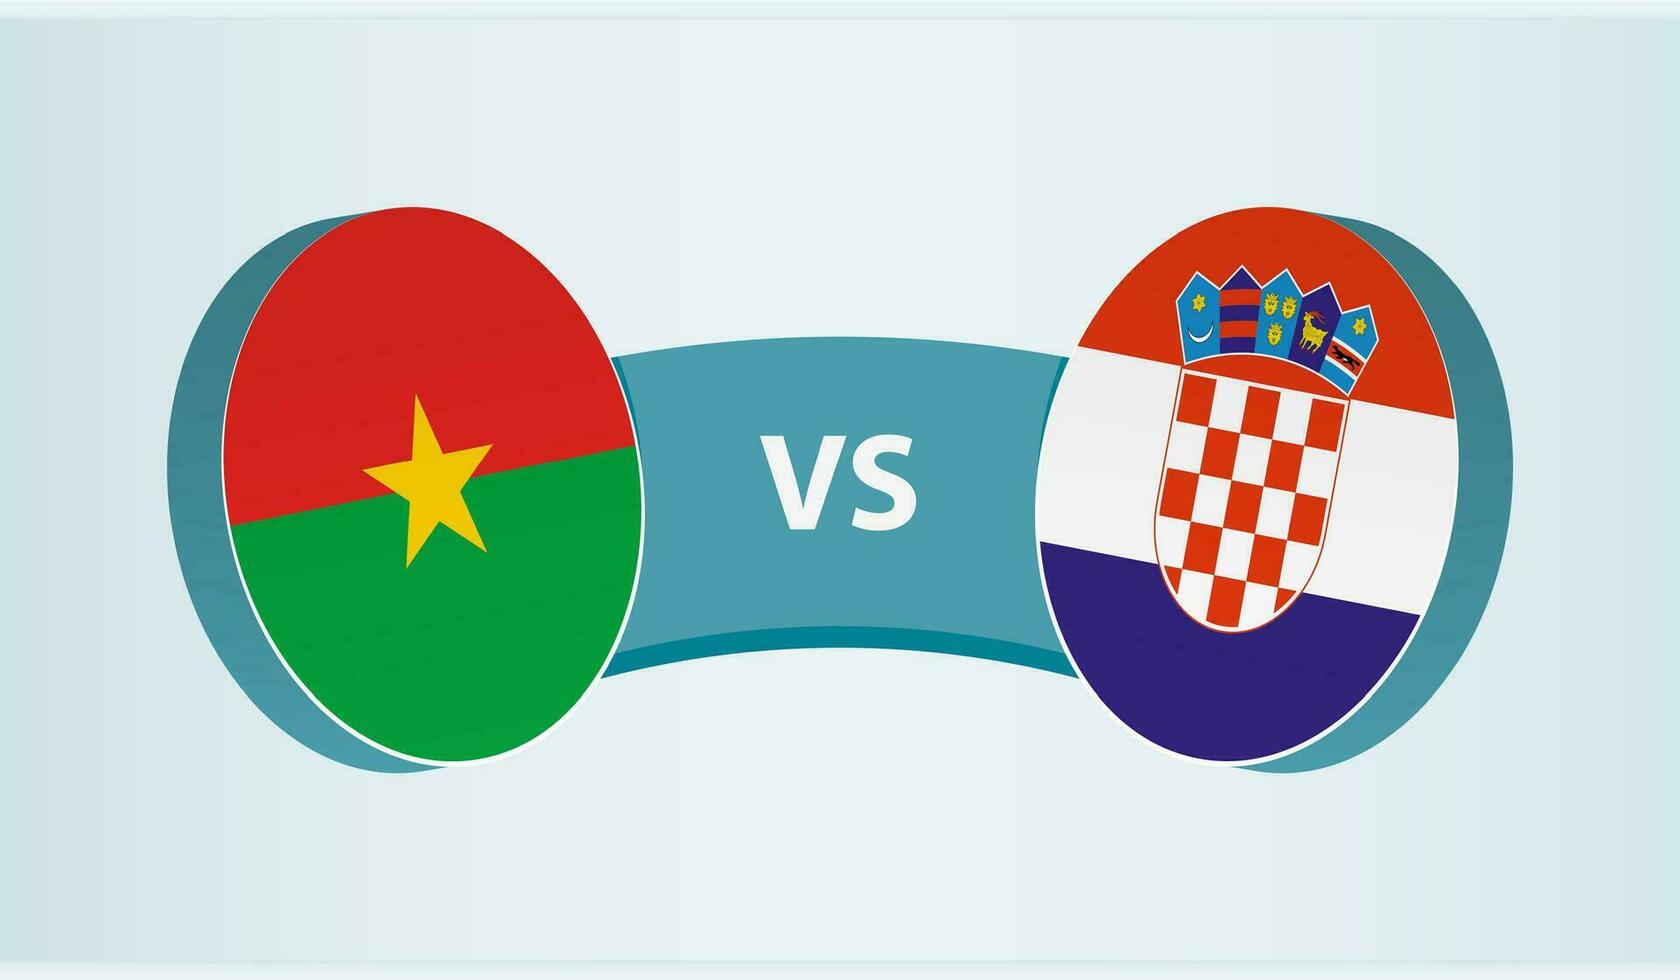 burkina faso versus Croácia, equipe Esportes concorrência conceito. vetor